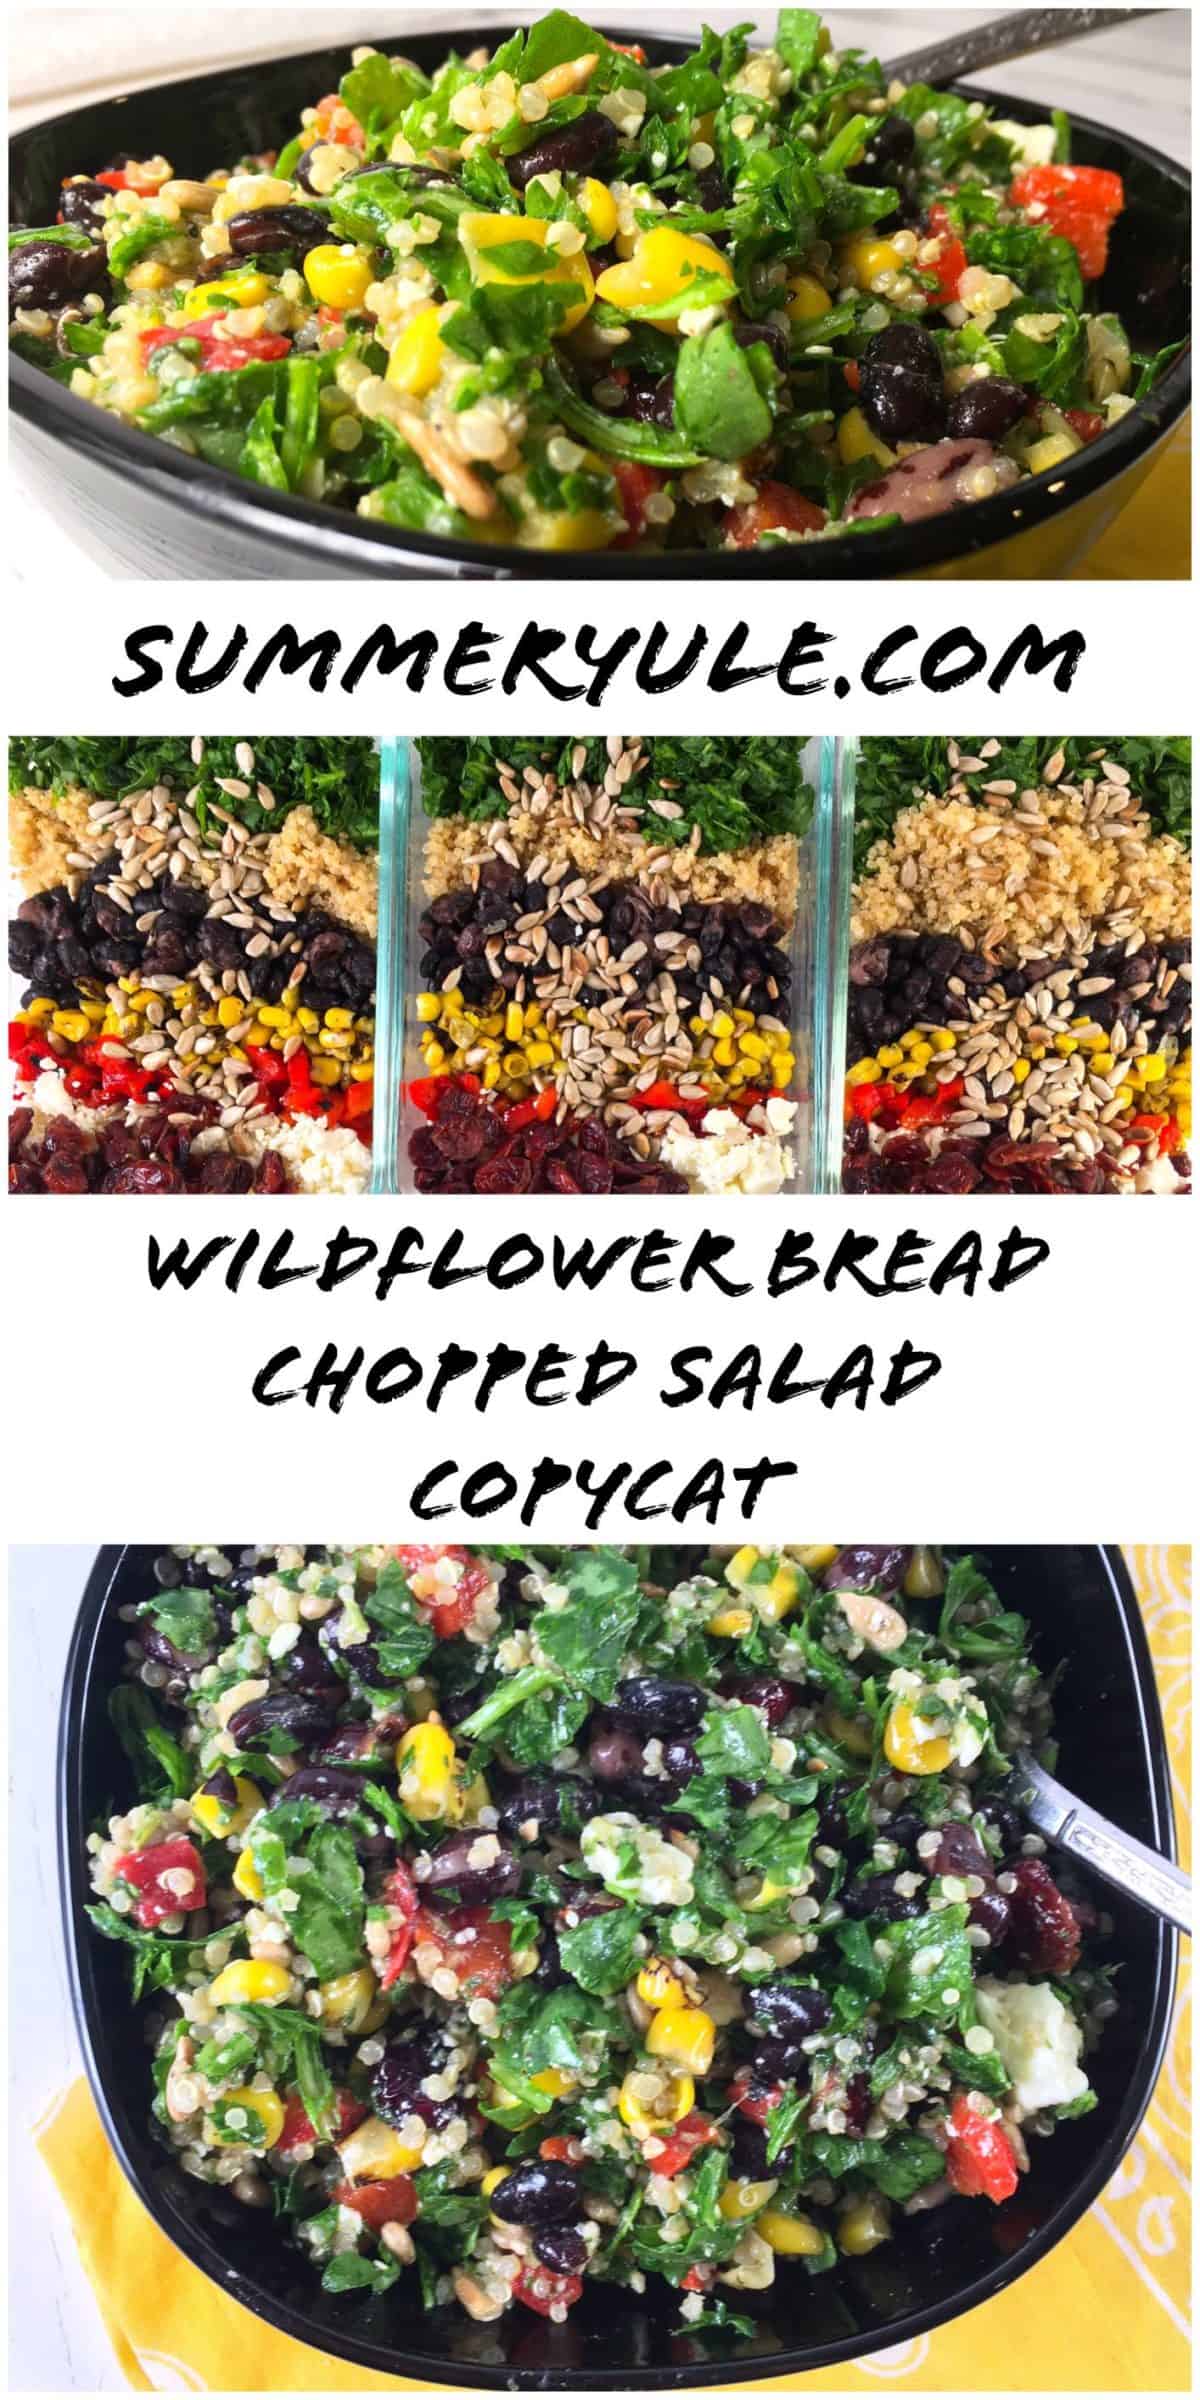 Wildflower Bread Chopped Salad Copycat Pinterest Image